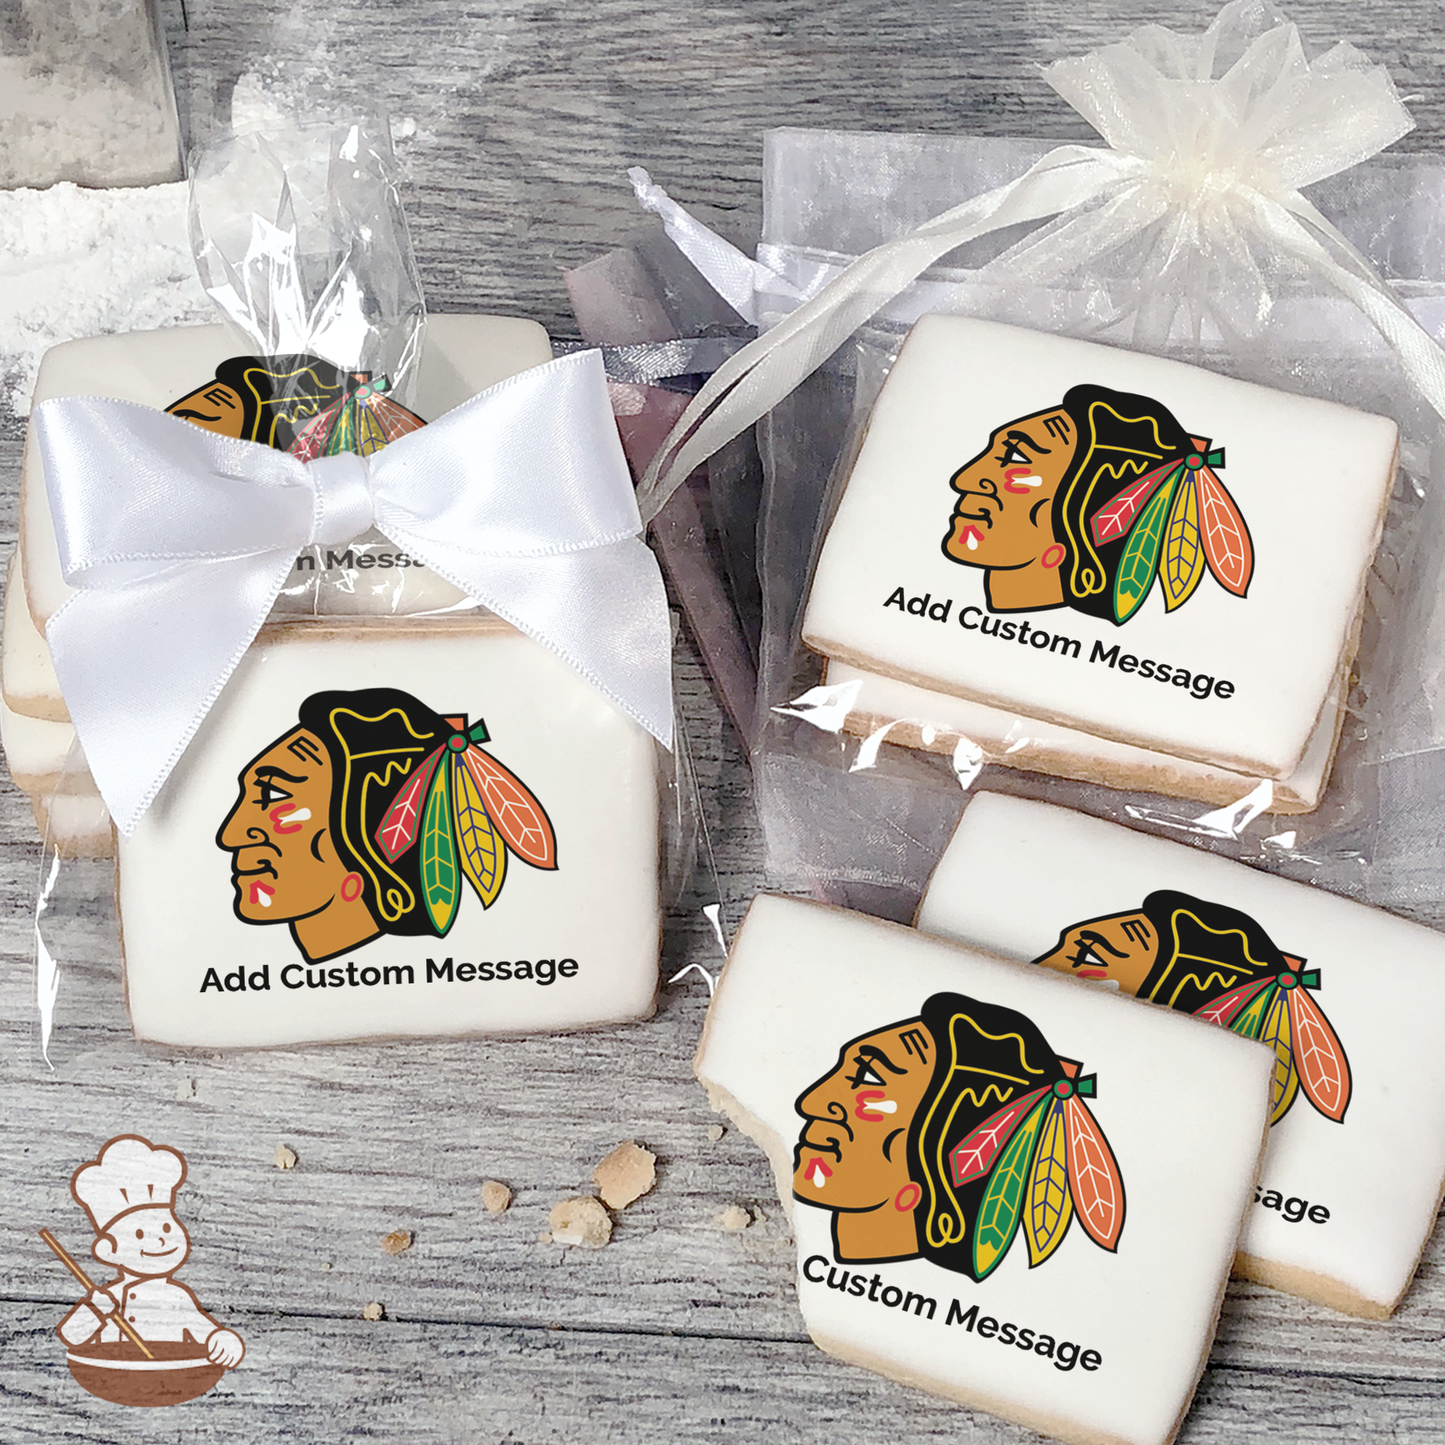 NHL Chicago Blackhawks Custom Message Cookies (Rectangle)